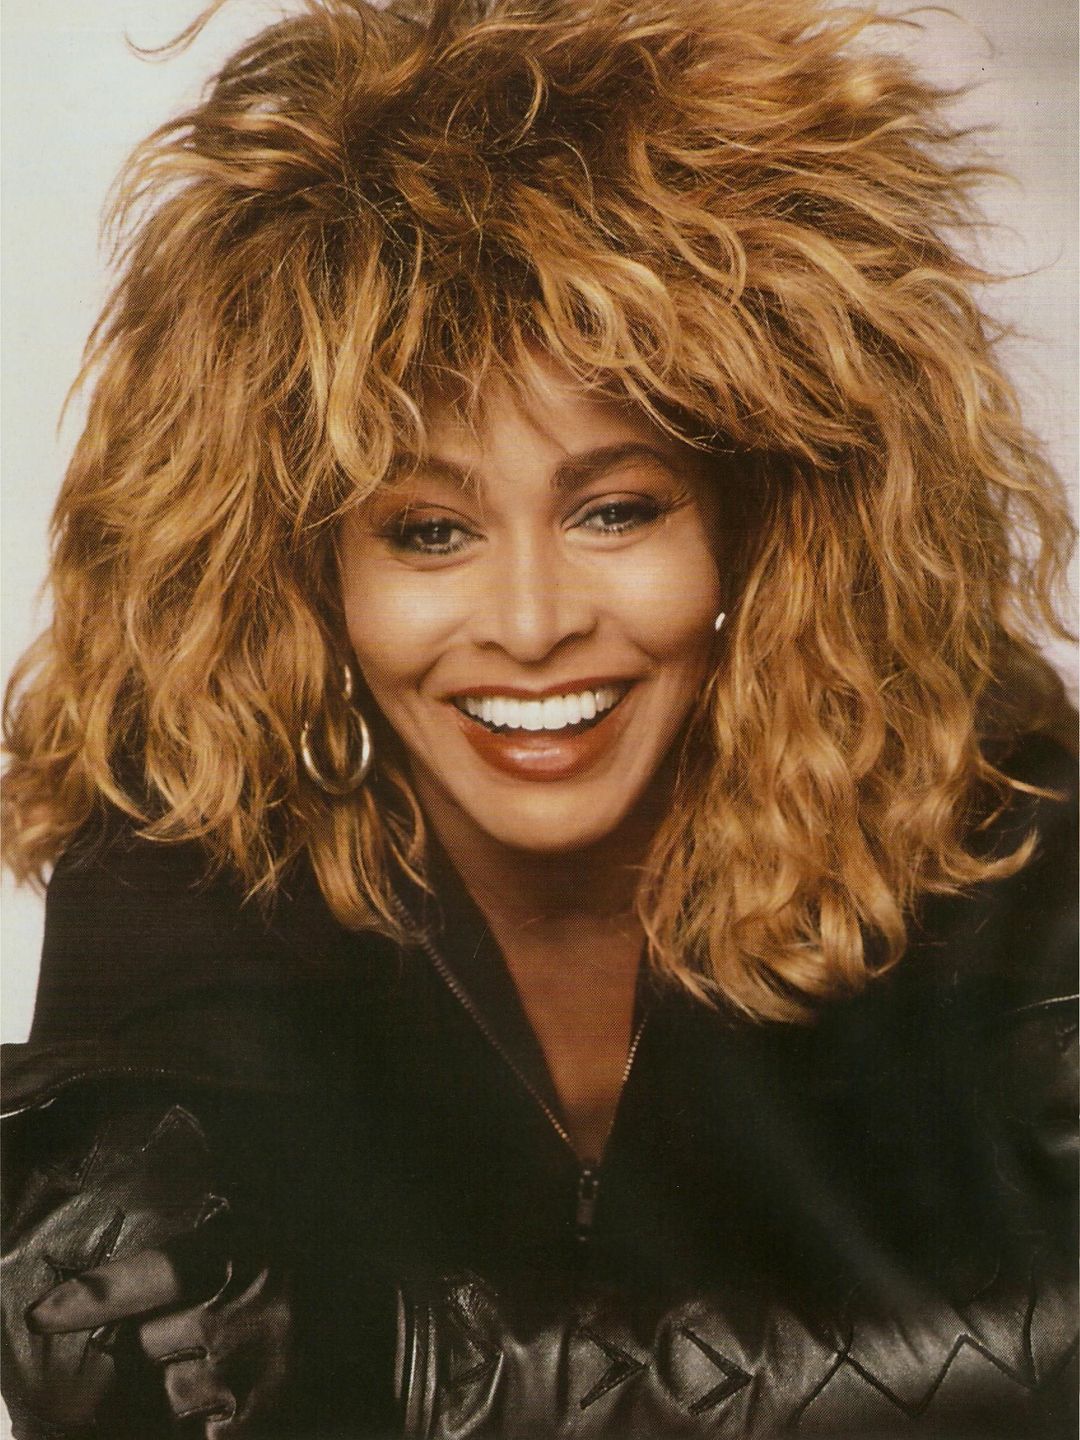 Tina Turner main achievements